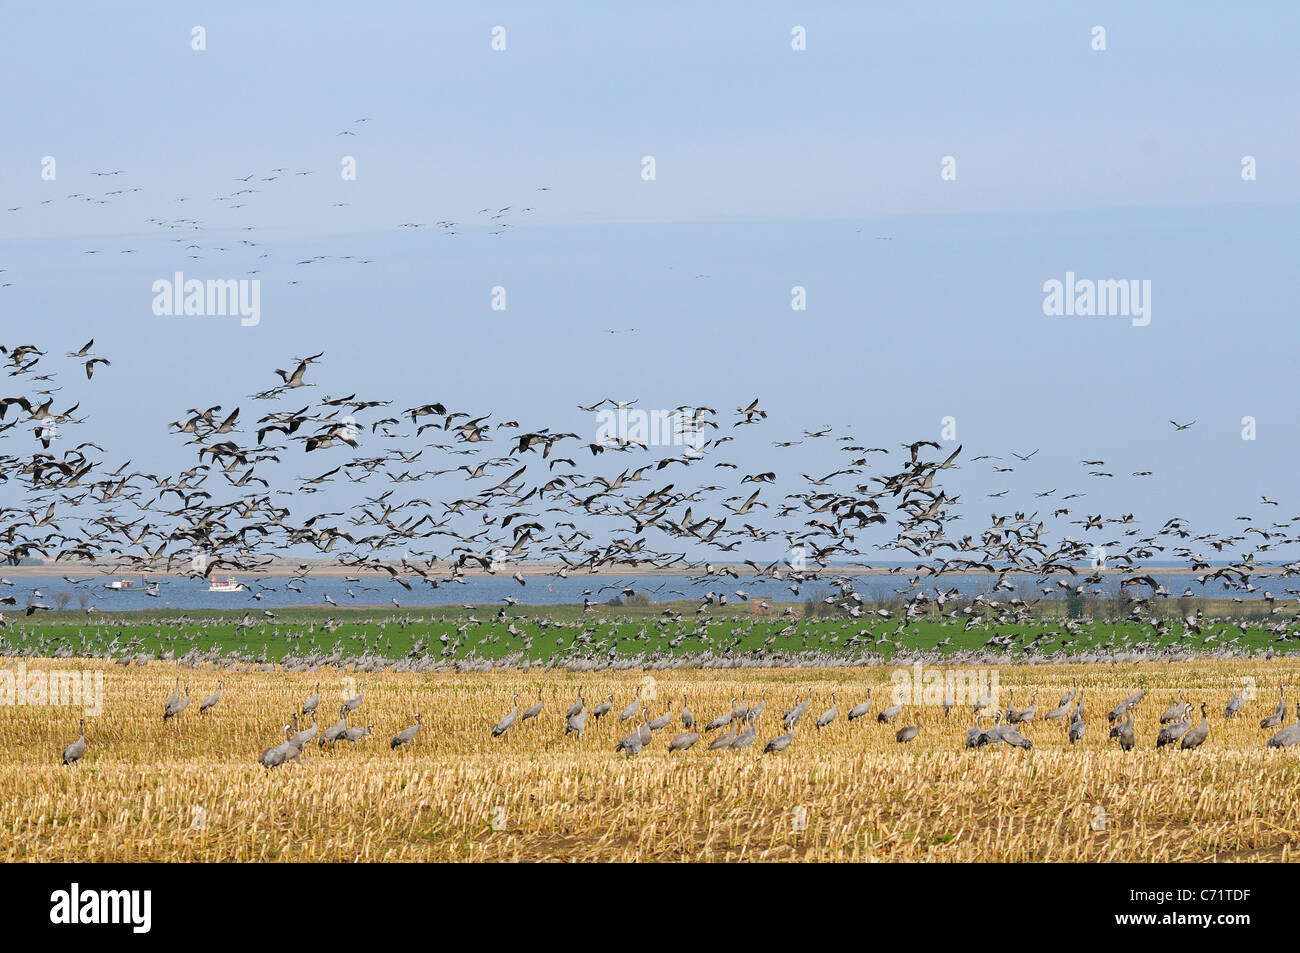 Common or Eurasian crane (Grus grus) dense flock in flight over maize stubble field near Baltic Sea shore, Hohendorf, Germany. Stock Photo